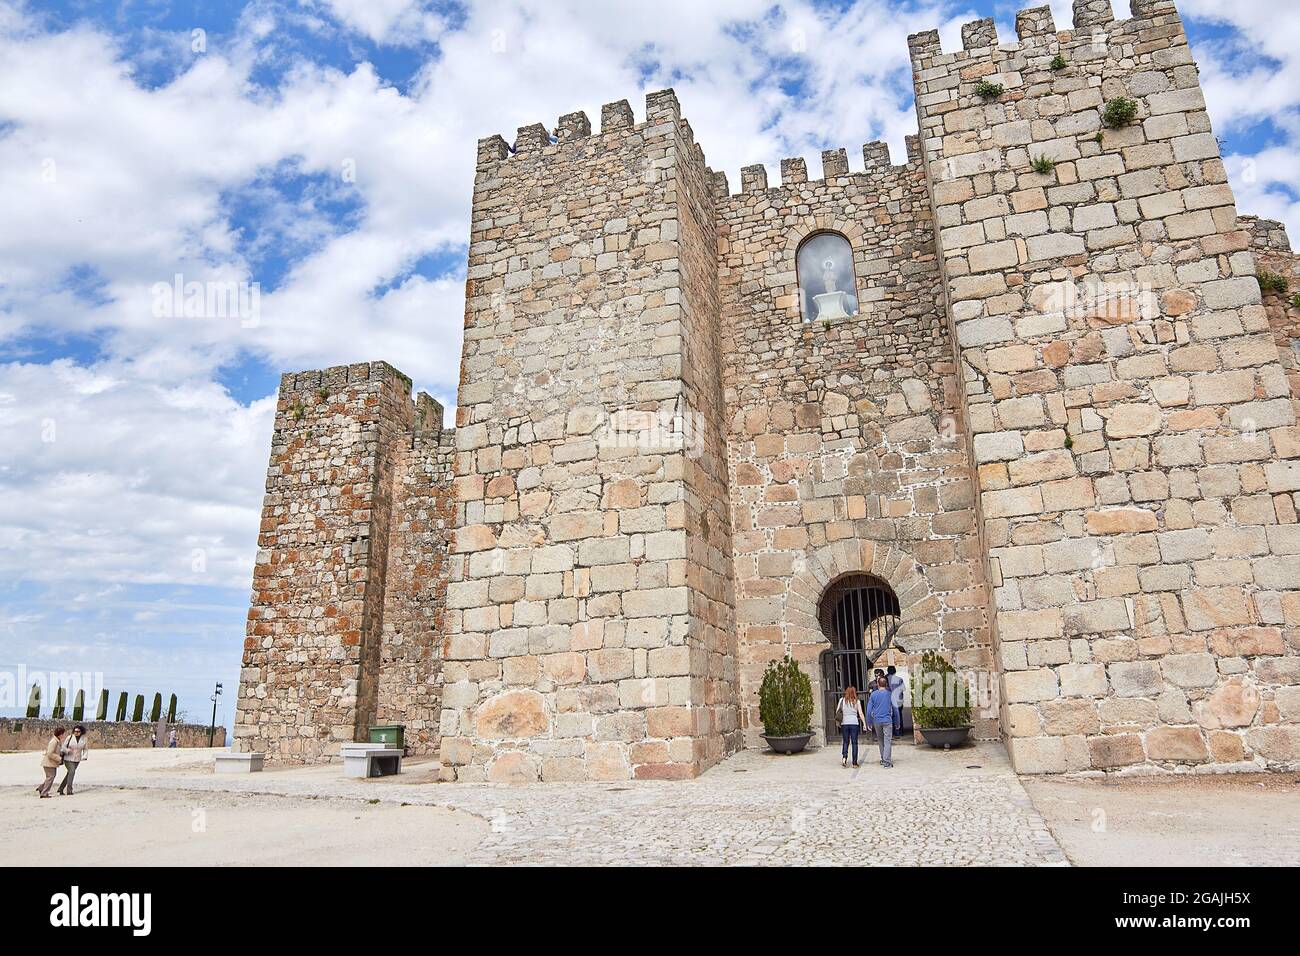 Castillo de Trujillo, medieval town in the province of Cáceres, Spain - Castillo de Trujillo, pueblo medieval en la provincia de Cáceres, España Stock Photo